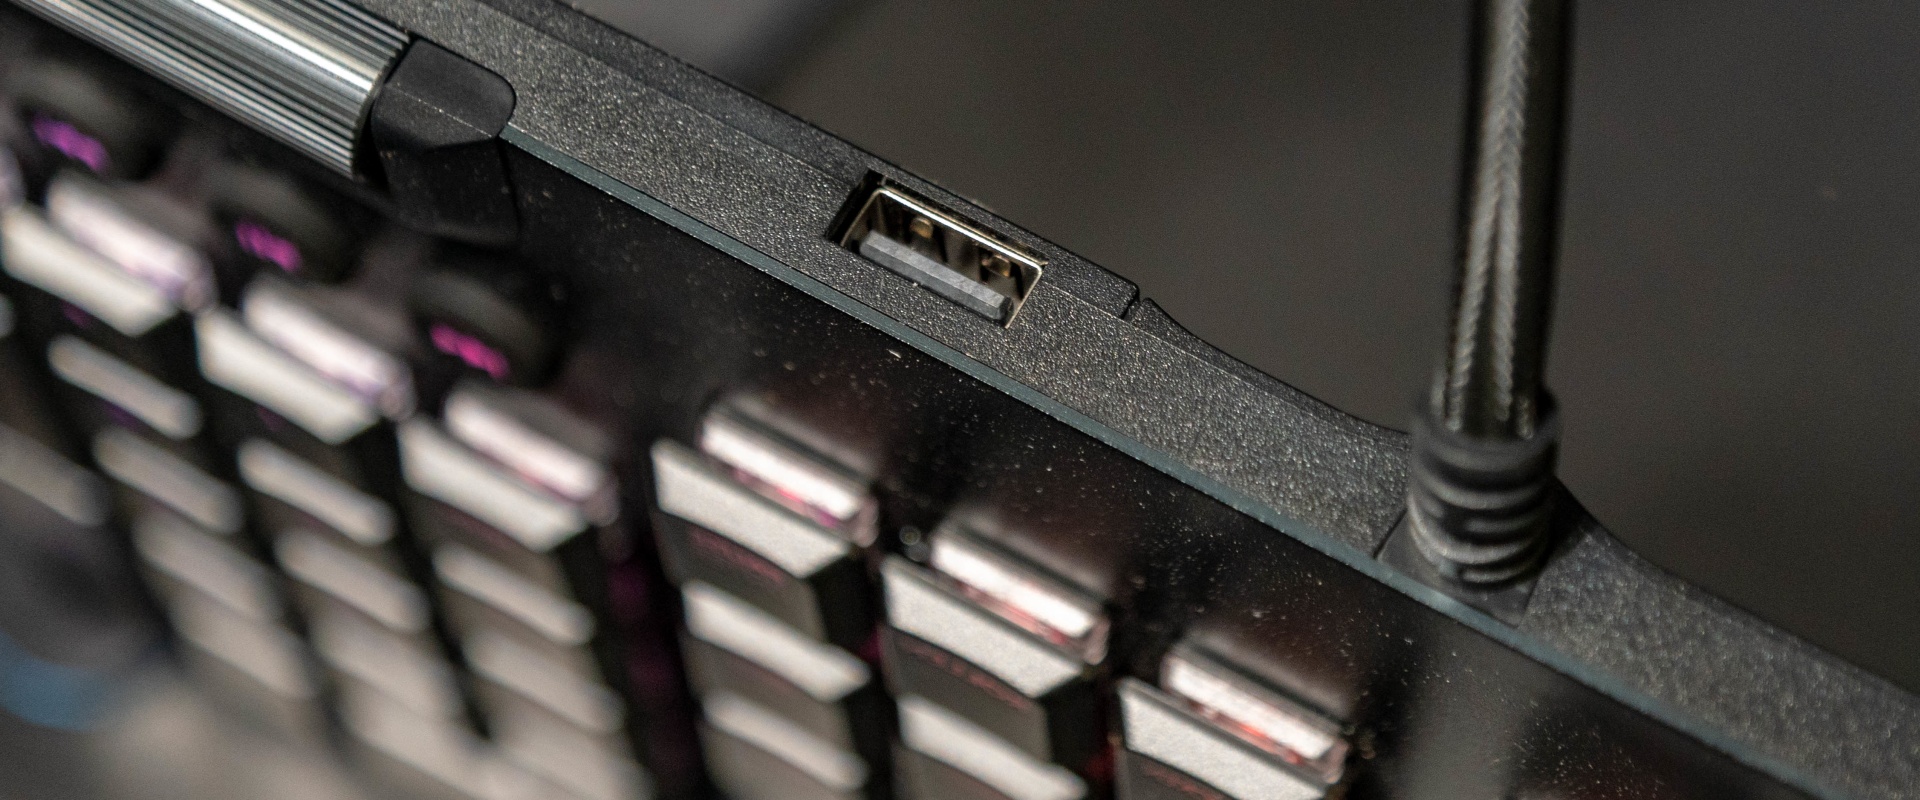 Sind kabellose Tastaturen langsamer als kabelgebundene?